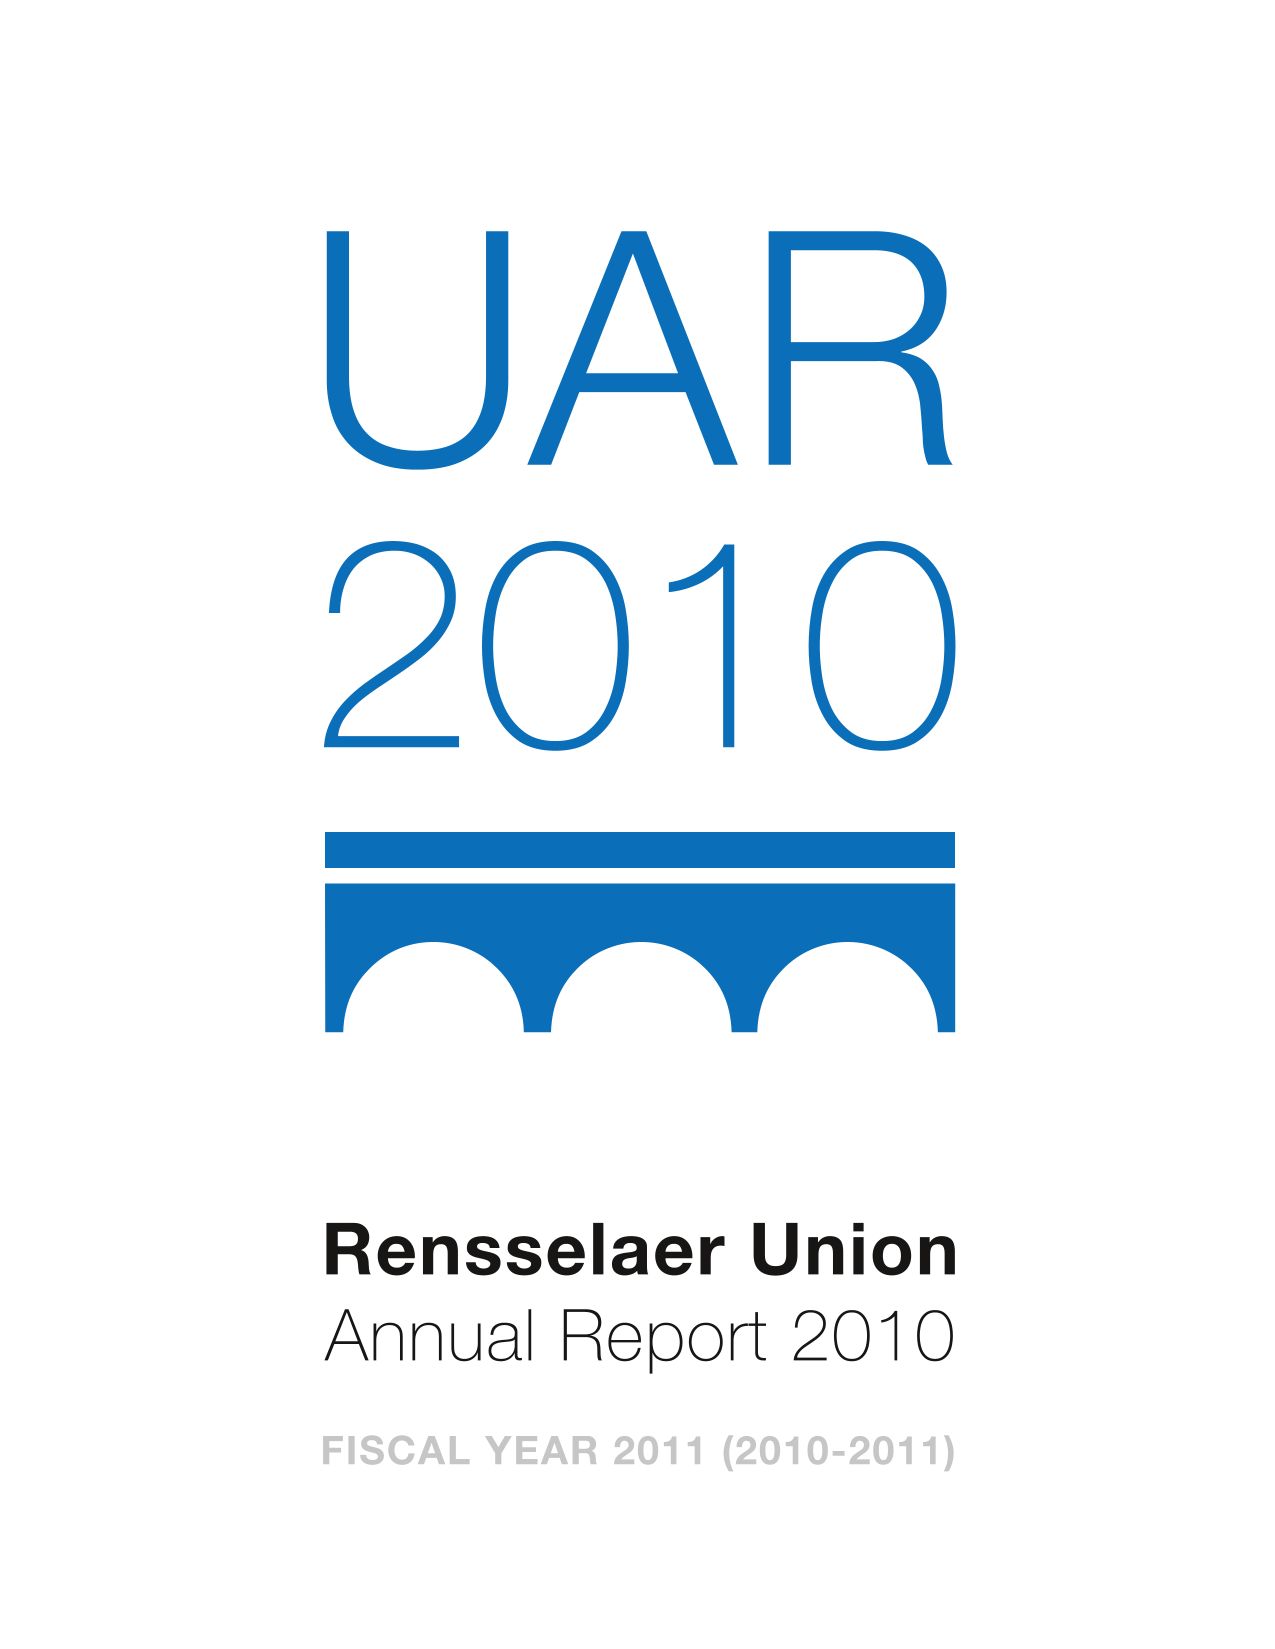 Rensselaer Union Annual Report 2010